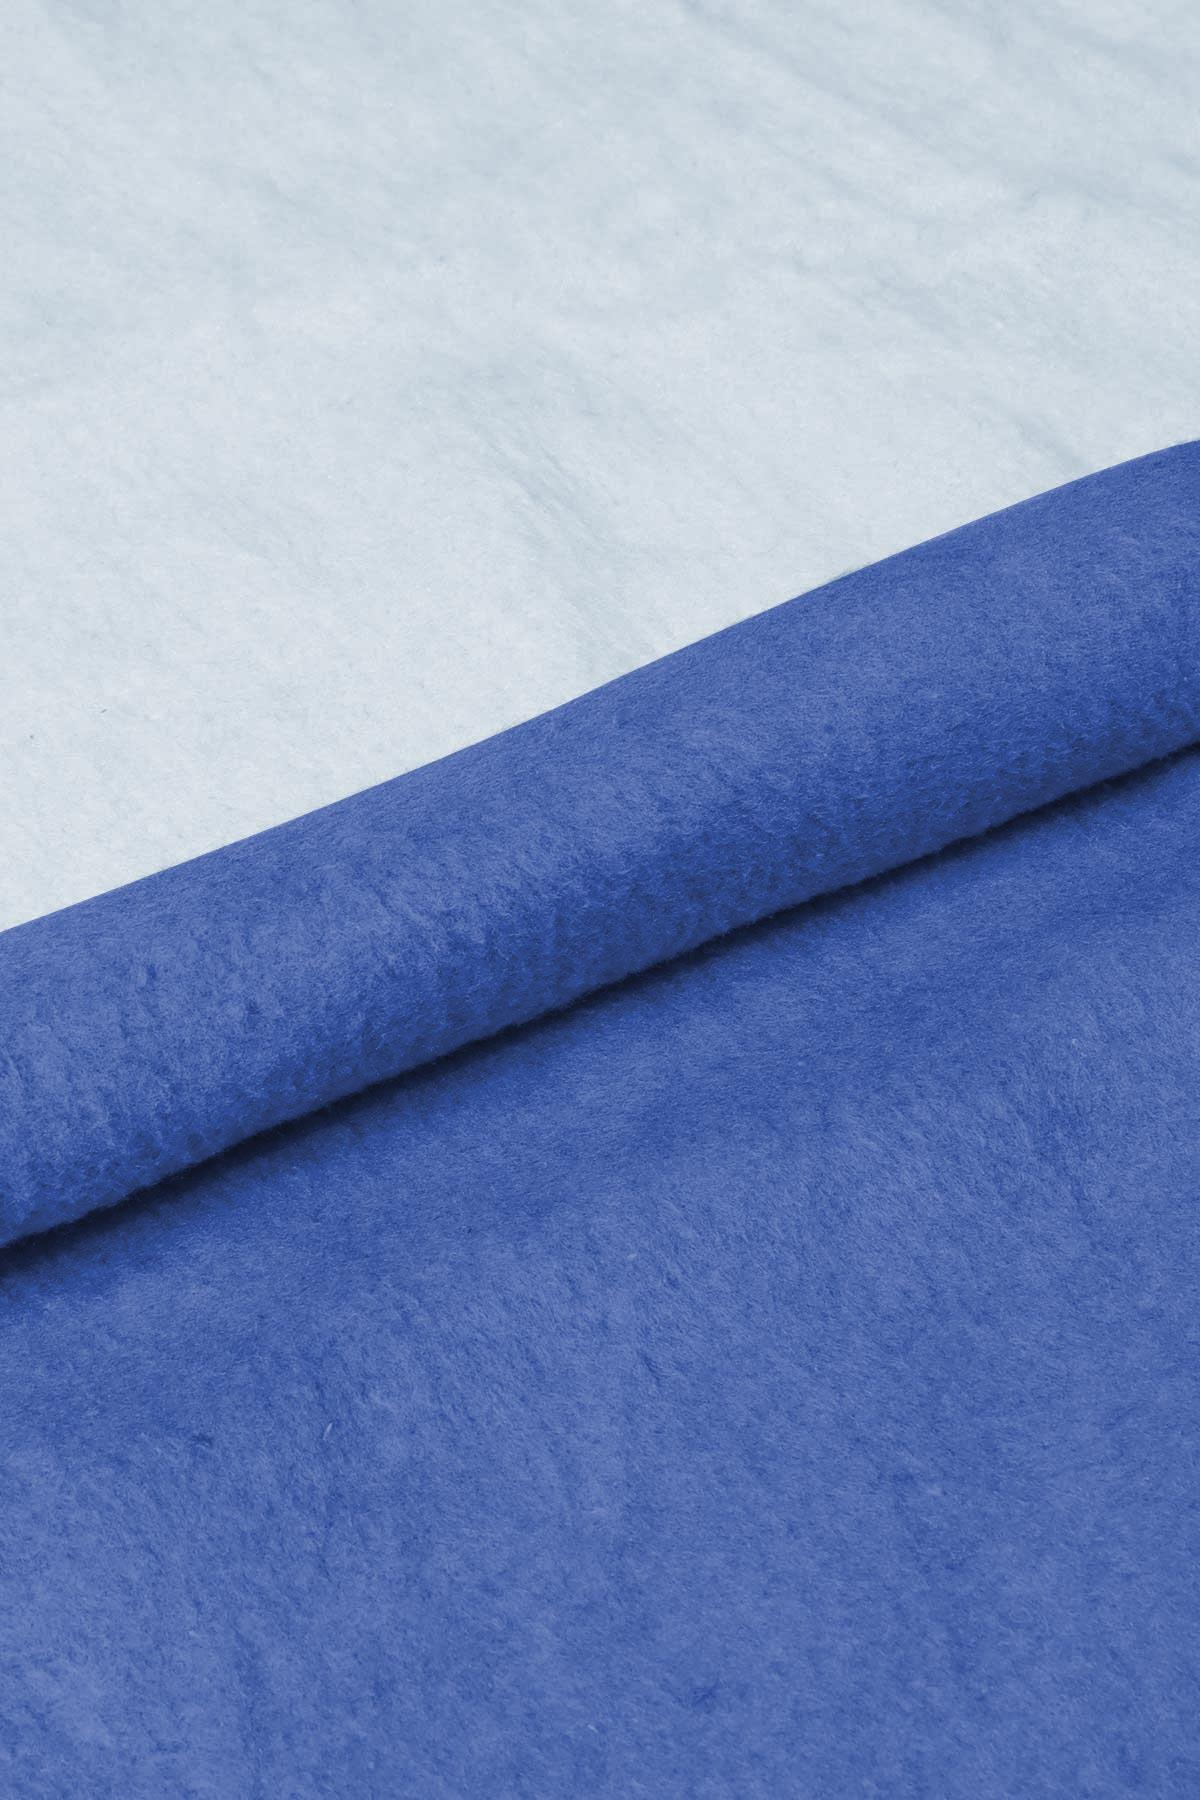 yesilhome cift kisilik pamuk battaniye cift tarafli battaniye lacivert mavi 120001.jpg